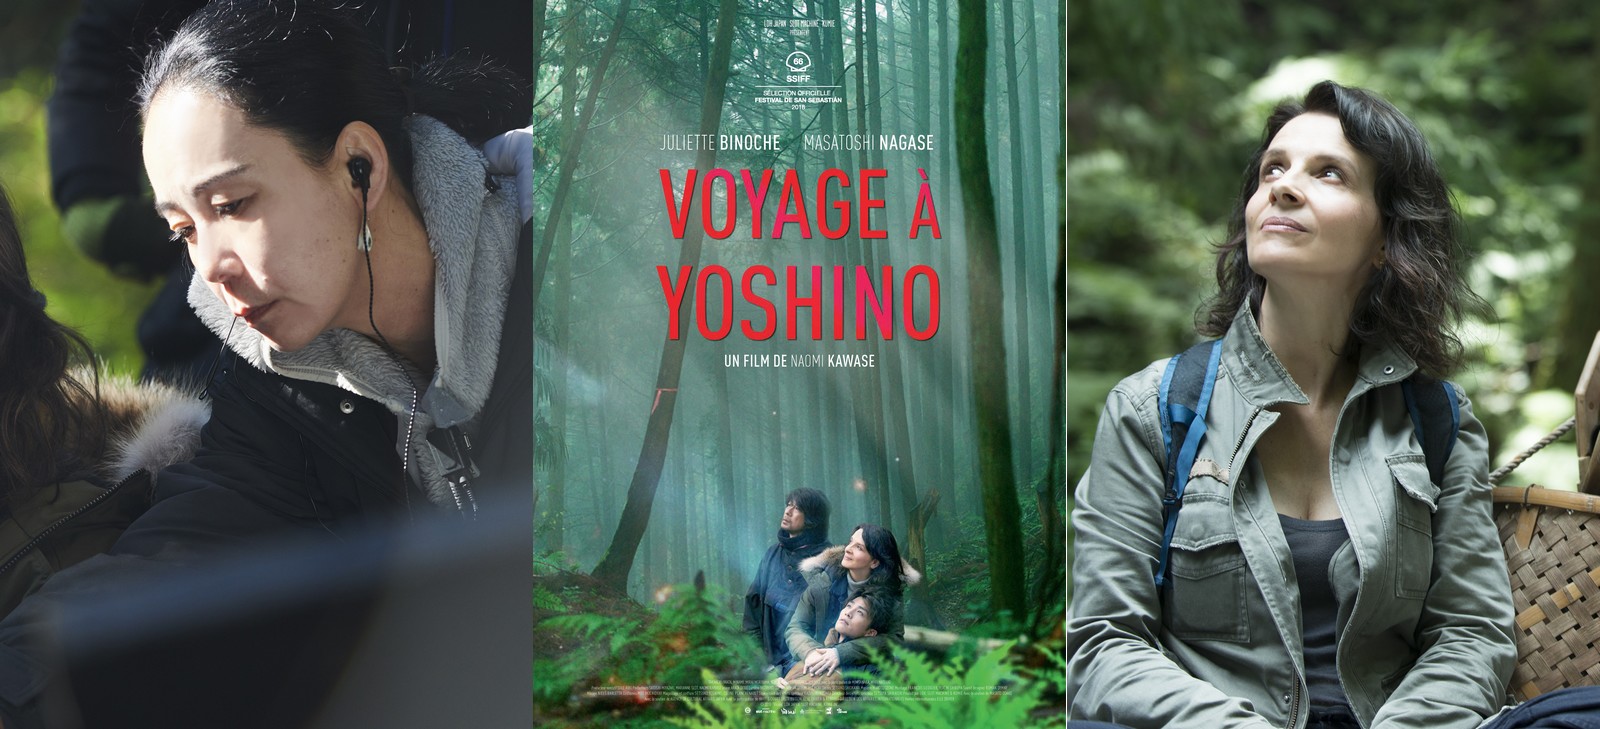 Interview de Naomi Kawase, à l'occasion de la sortie de son film Voyage à Yoshino avec Juliette Binoche